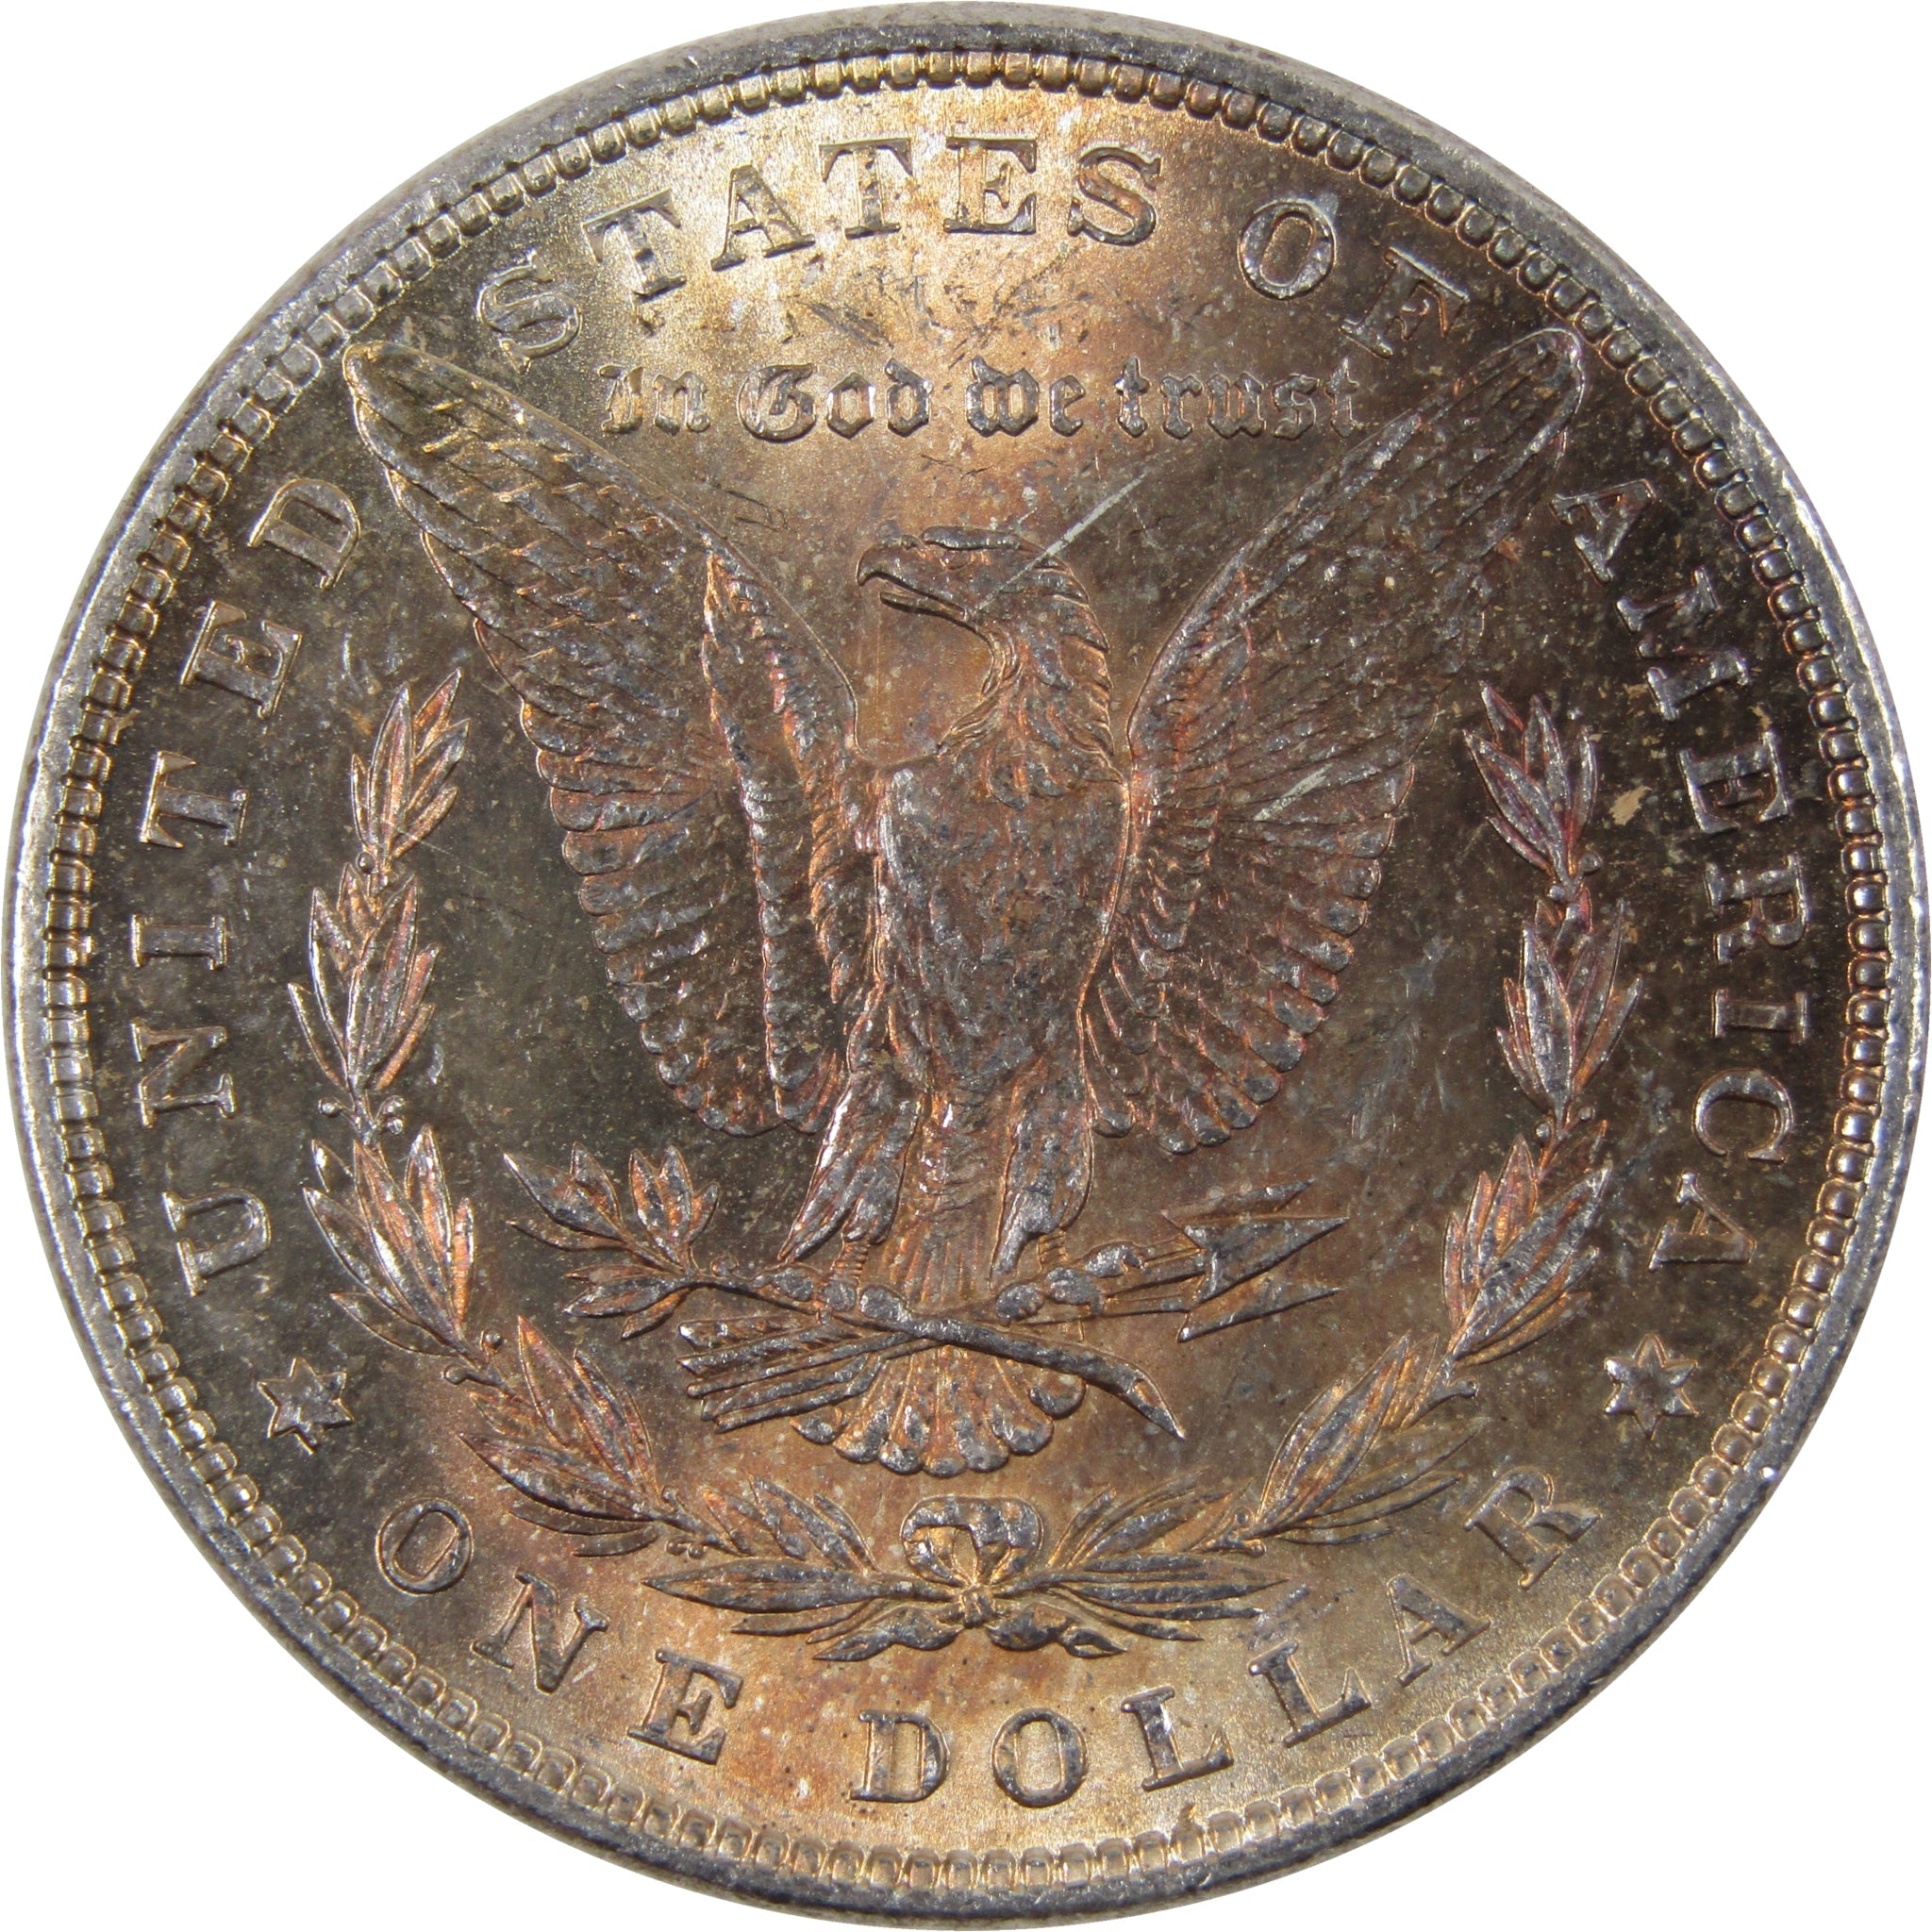 1881 Morgan Dollar BU Uncirculated Mint State Silver Toned SKU:I2447